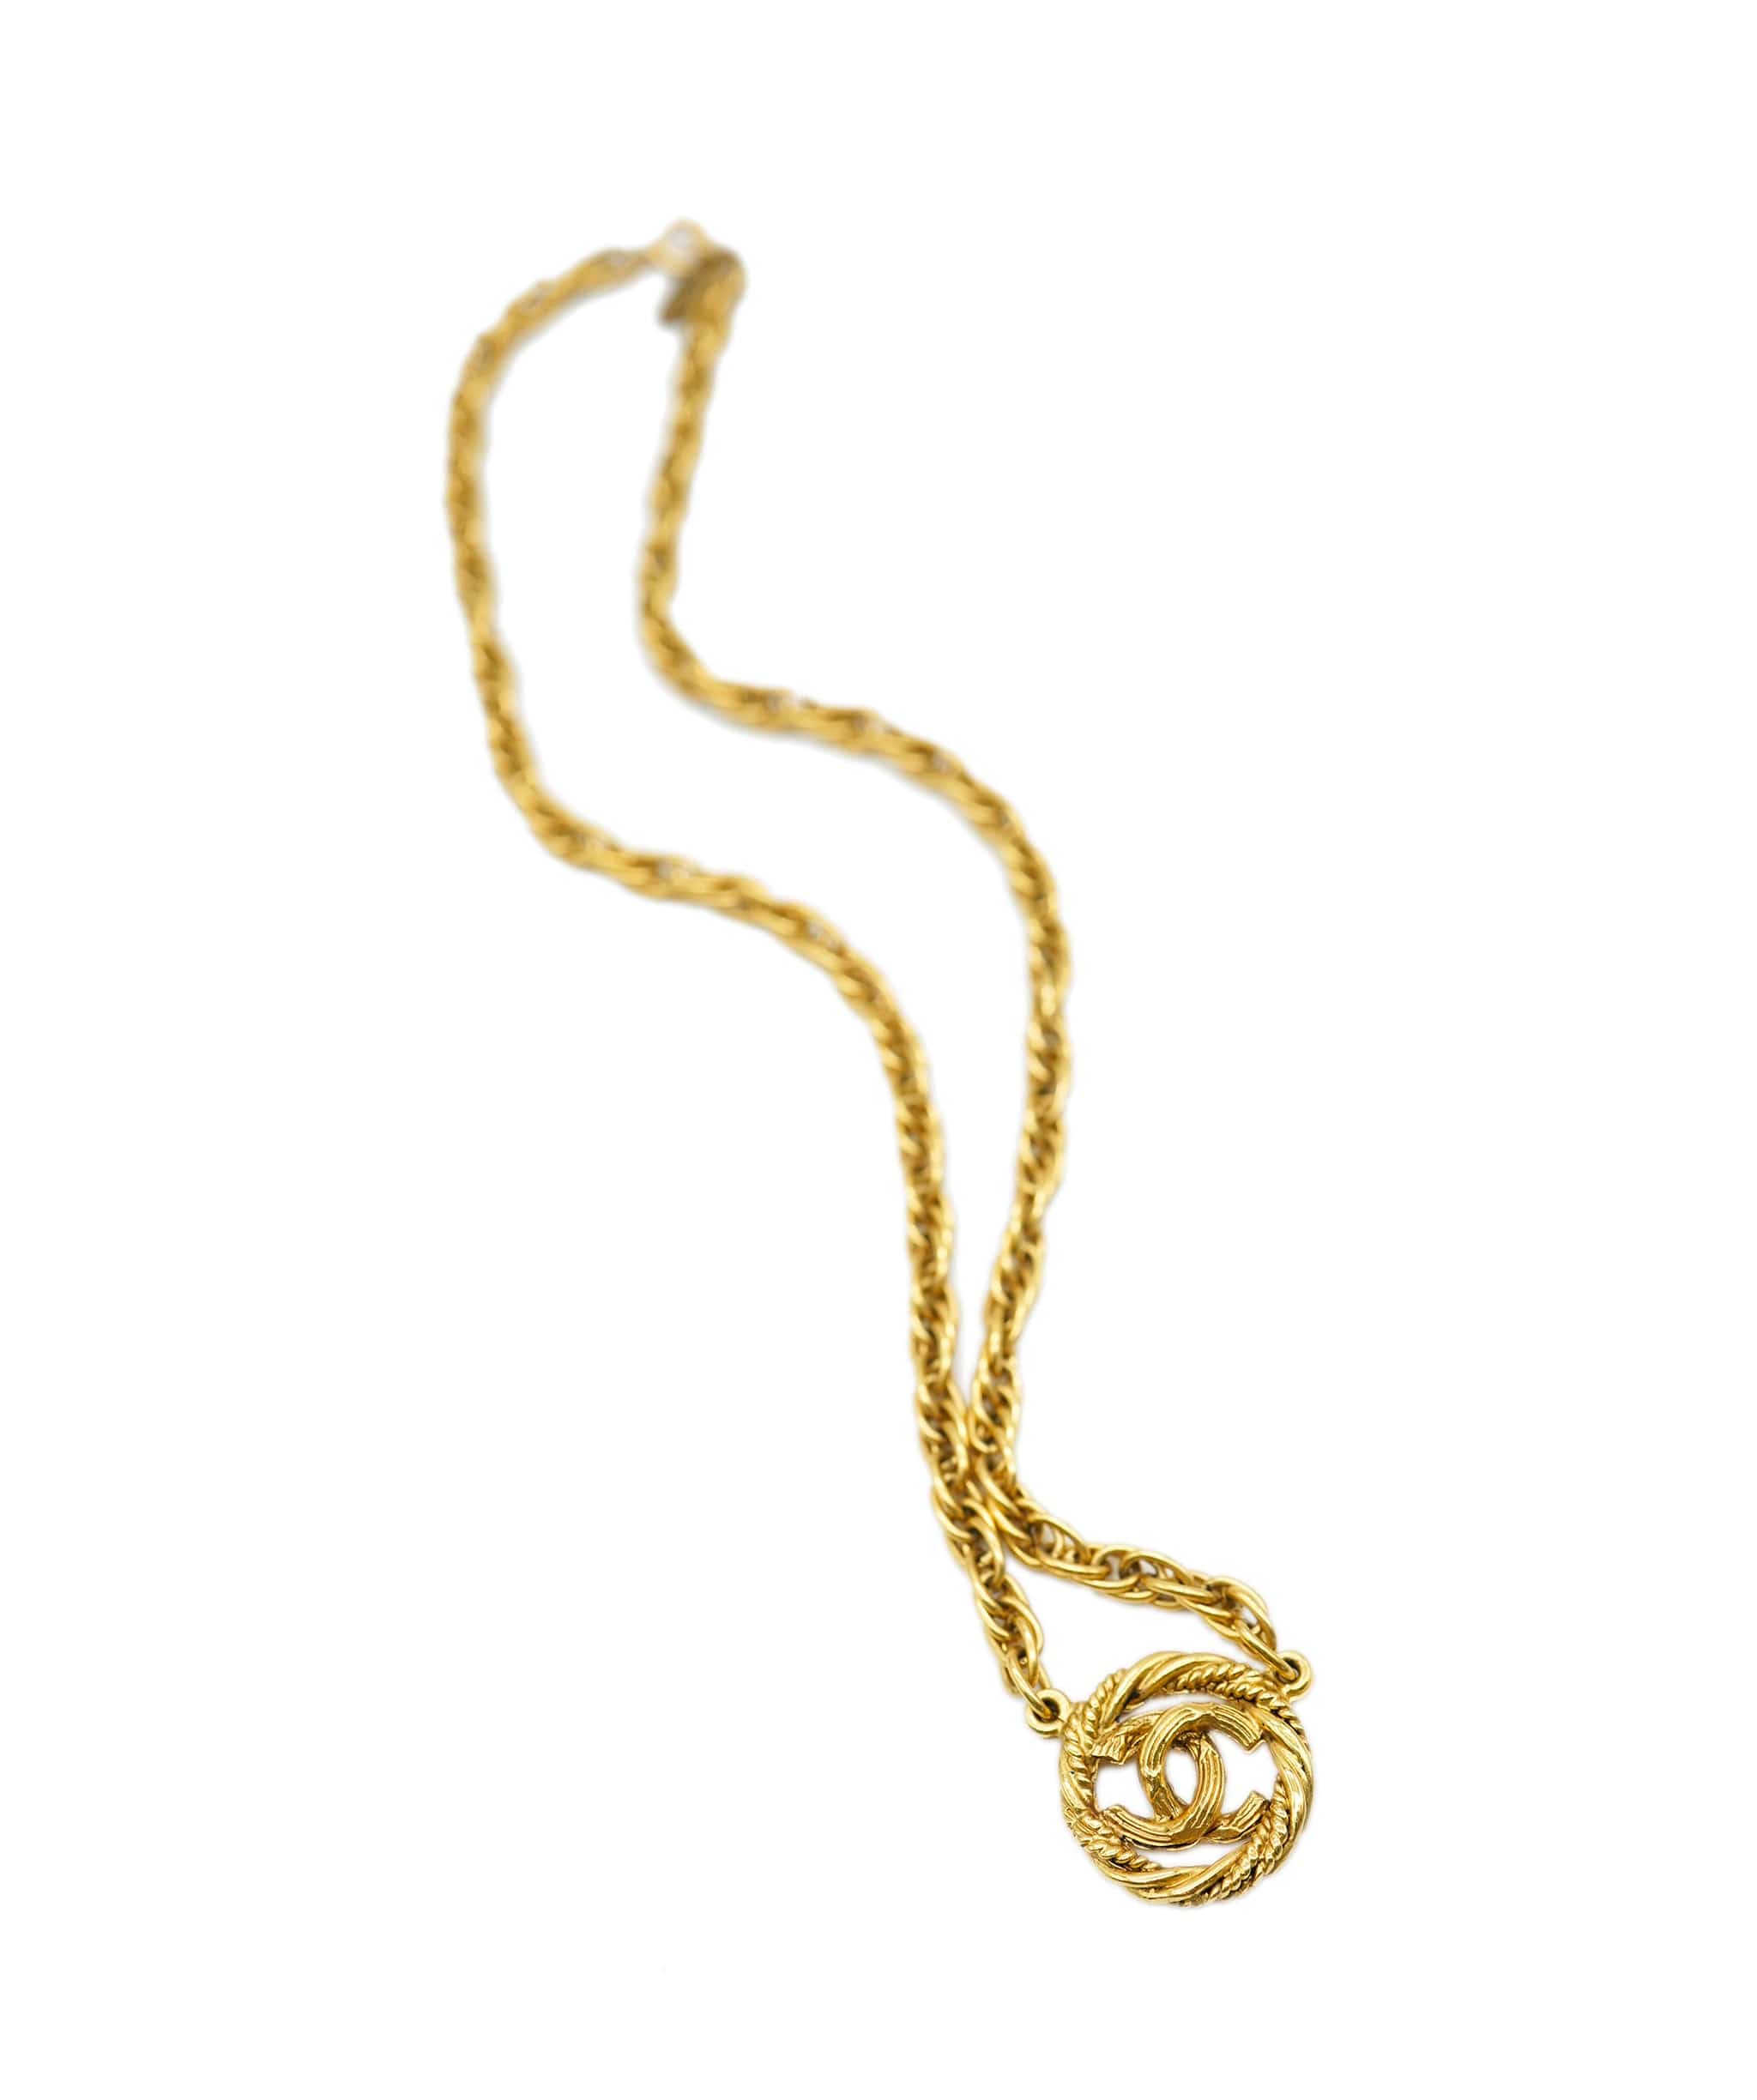 Chanel Chanel Vintage Medallion Necklace